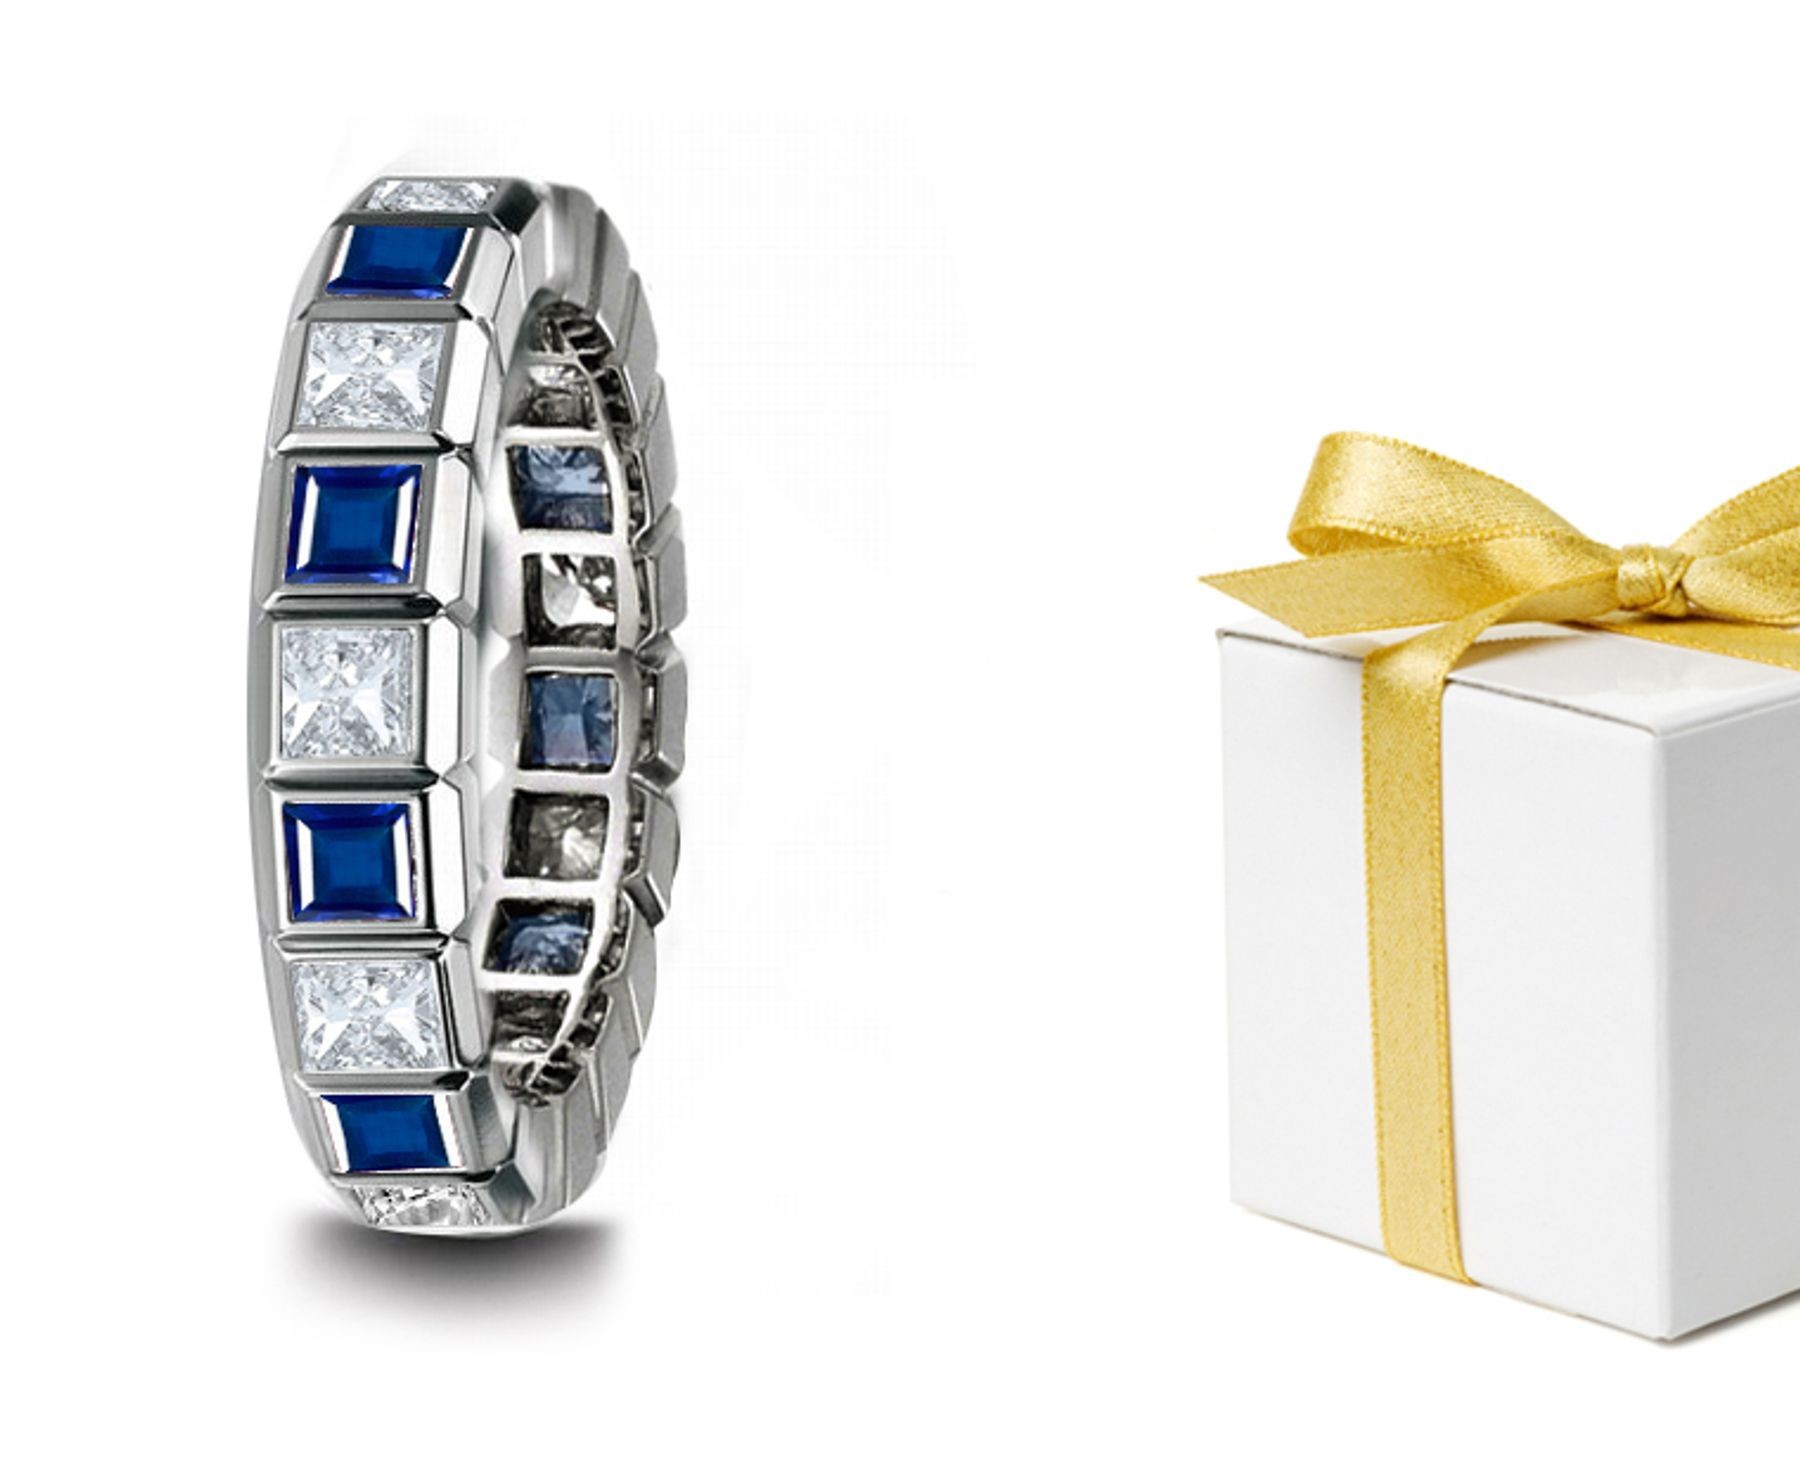 Bezel Set Princess Cut Diamond Square Sapphire Ring in Platinum & 14k Gold